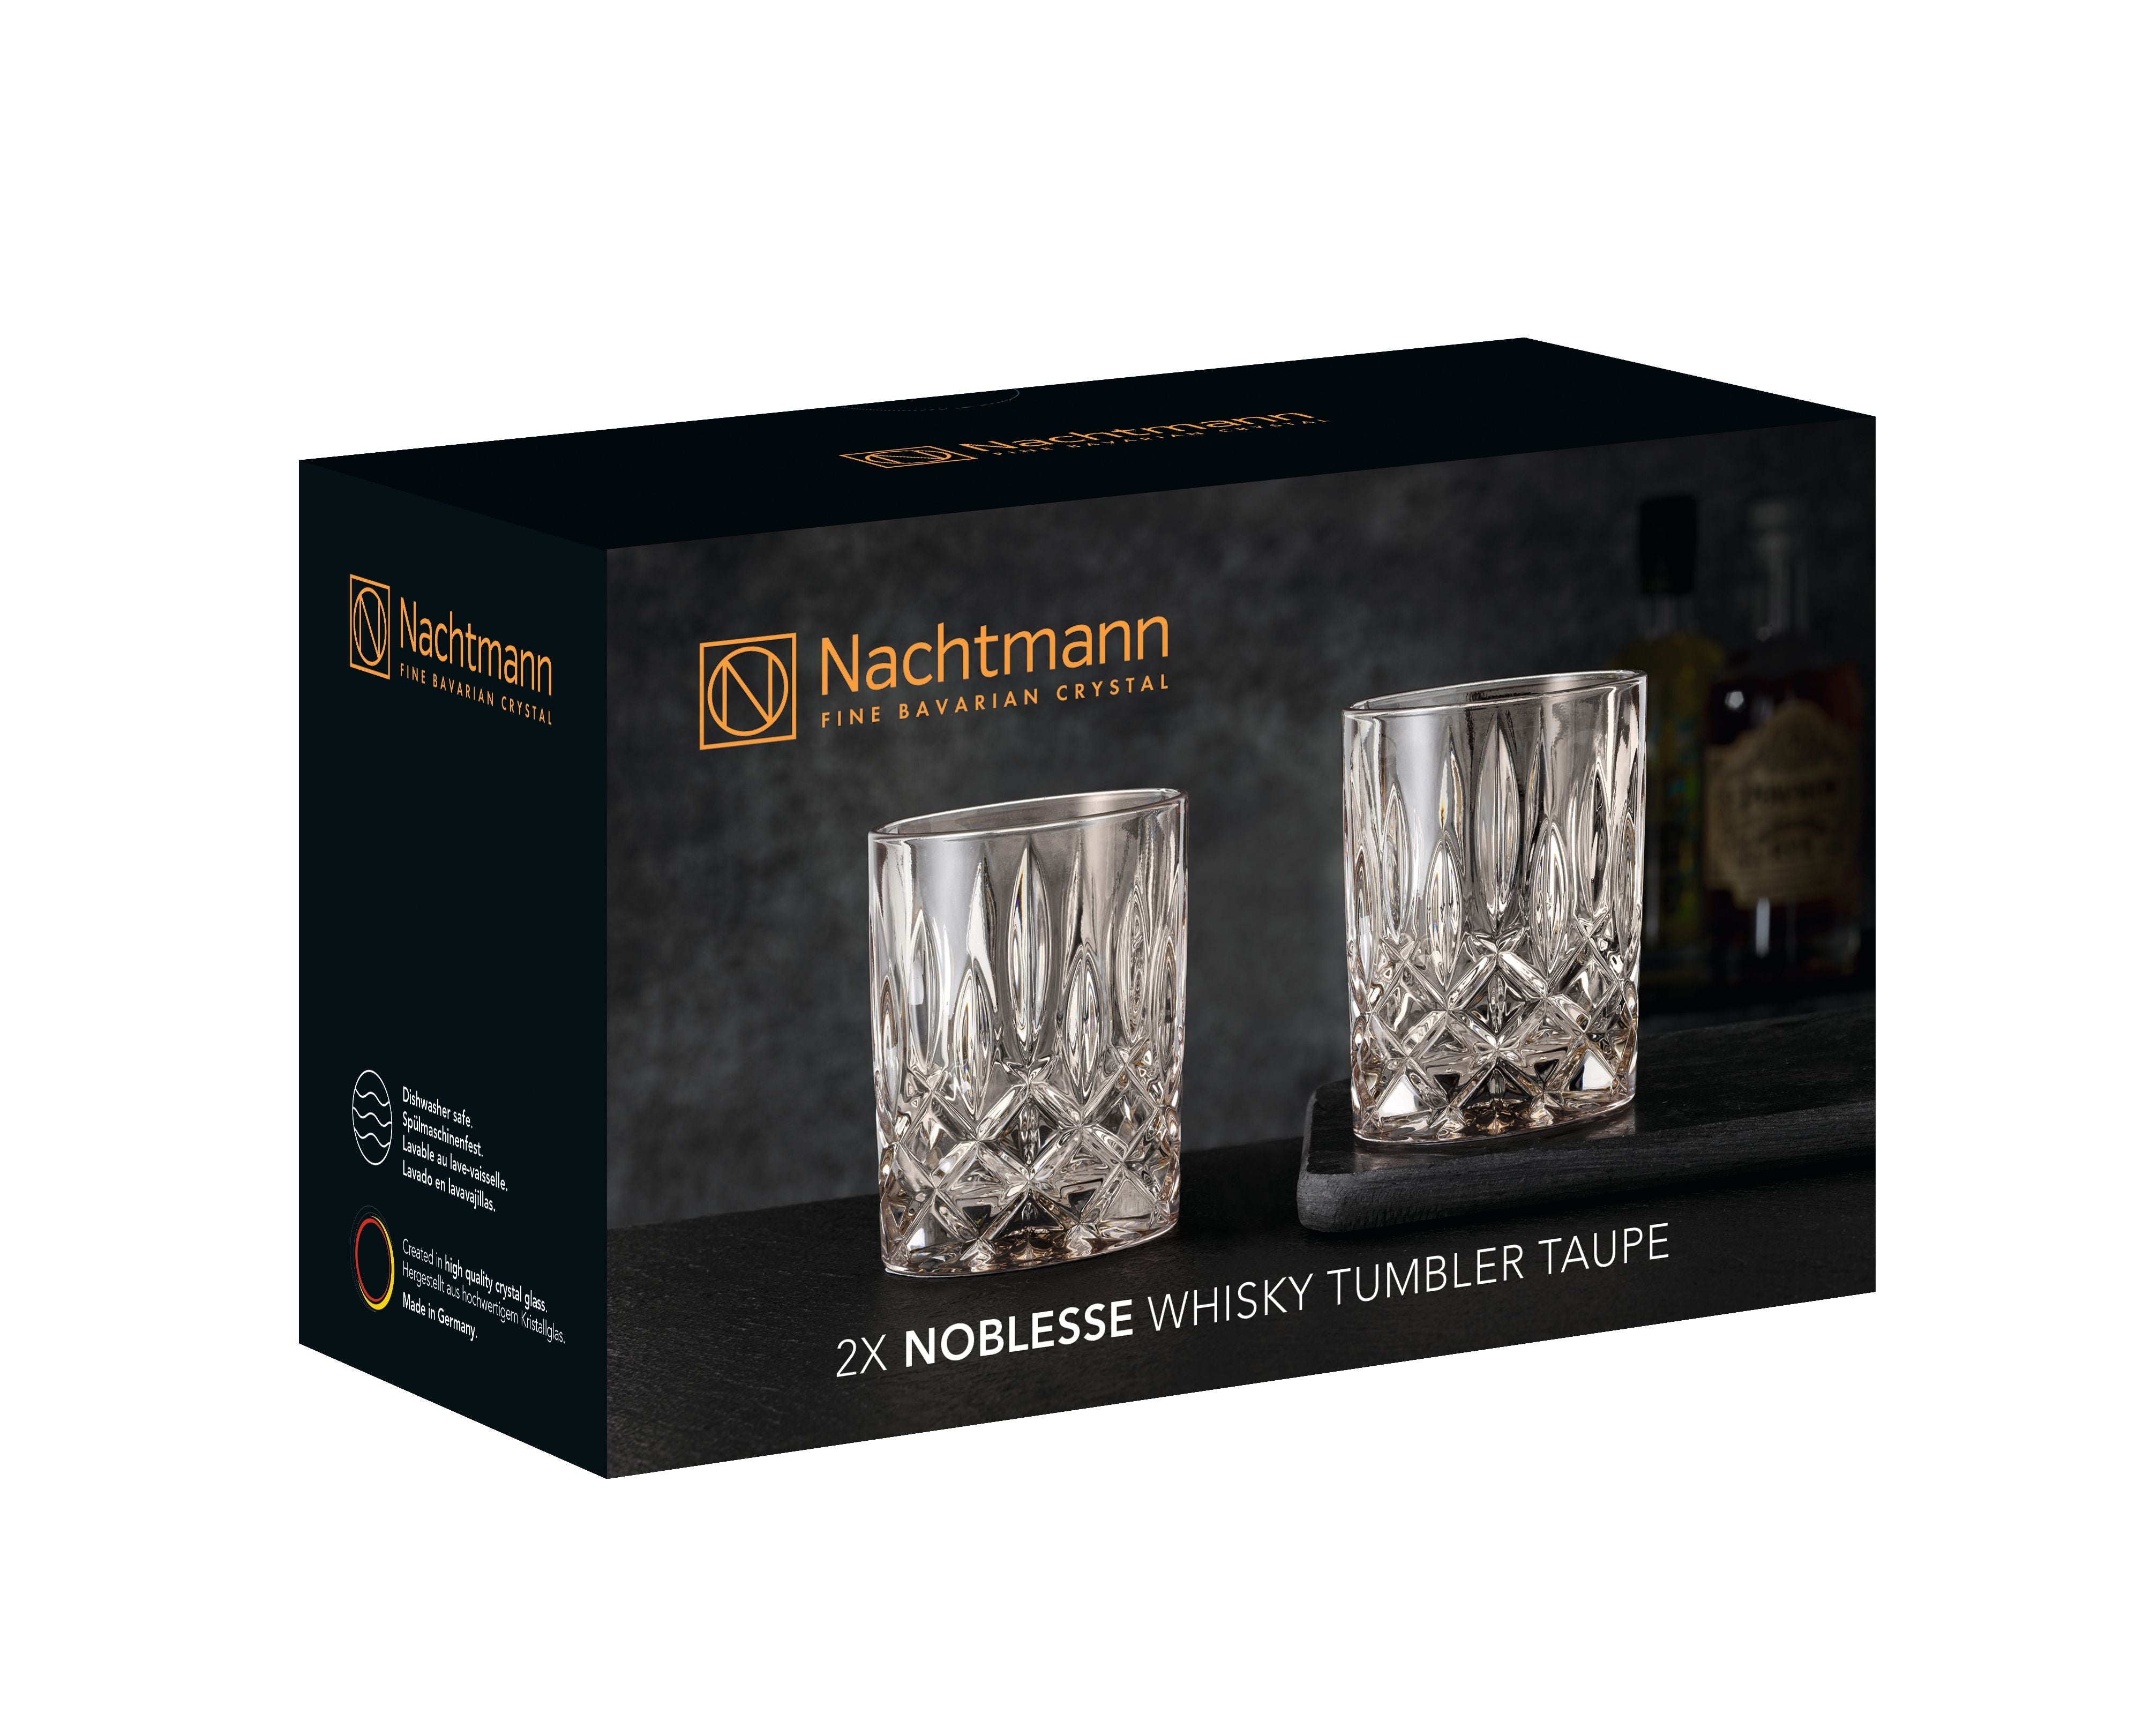 Nachtmann Noblesse威士忌玻璃灰褐色295毫升，2套2